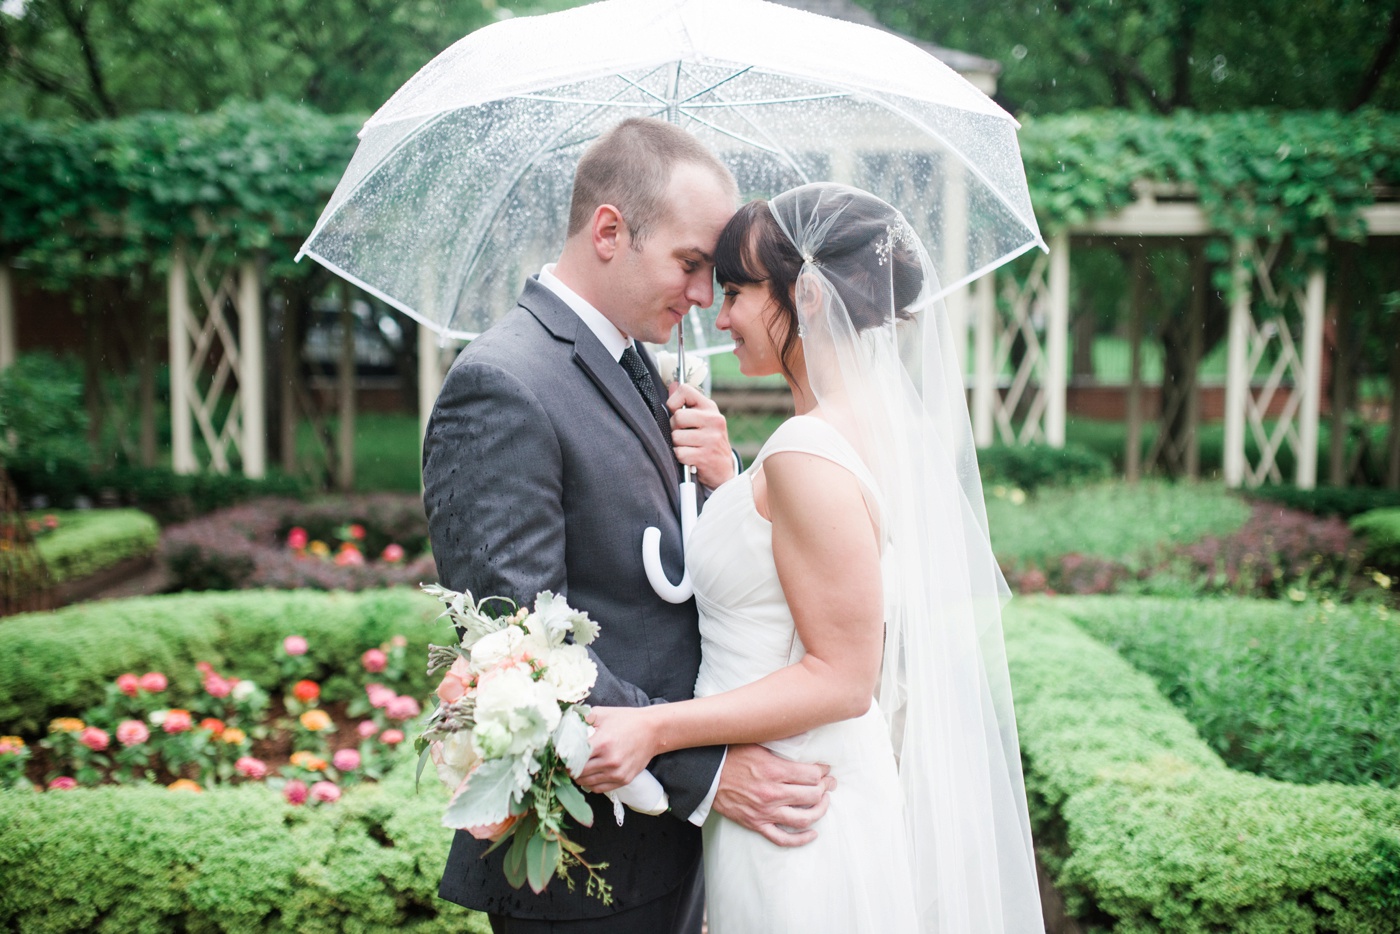 Lauren + Steve - Liberty View Ballroom Wedding - Philadelphia Wedding Photographer - Alison Dunn Photography photo